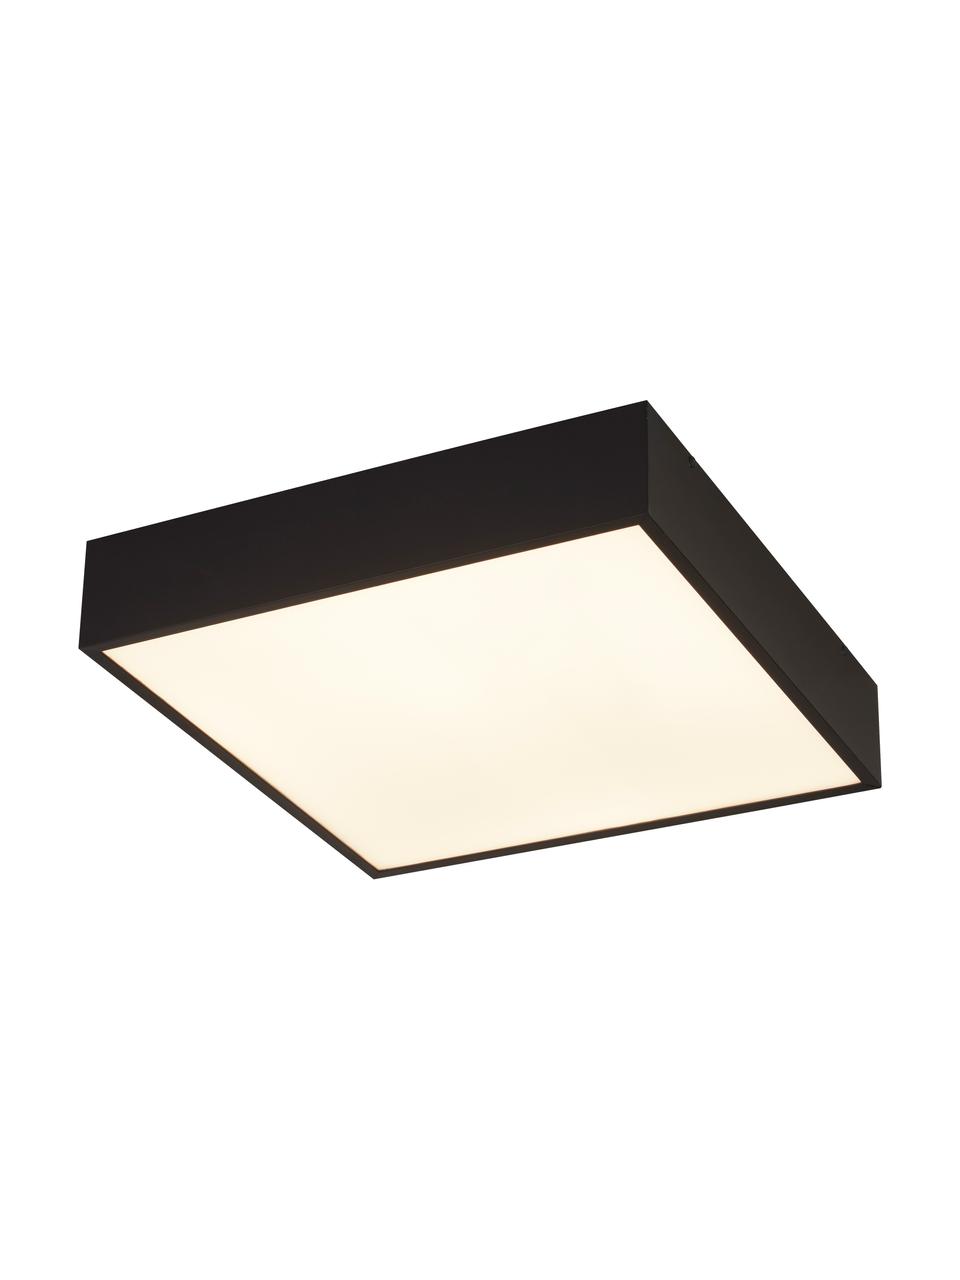 Kleine LED plafondlamp Zeus in zwart, Diffuser: kunststof, Zwart, B 30 x H 6 cm